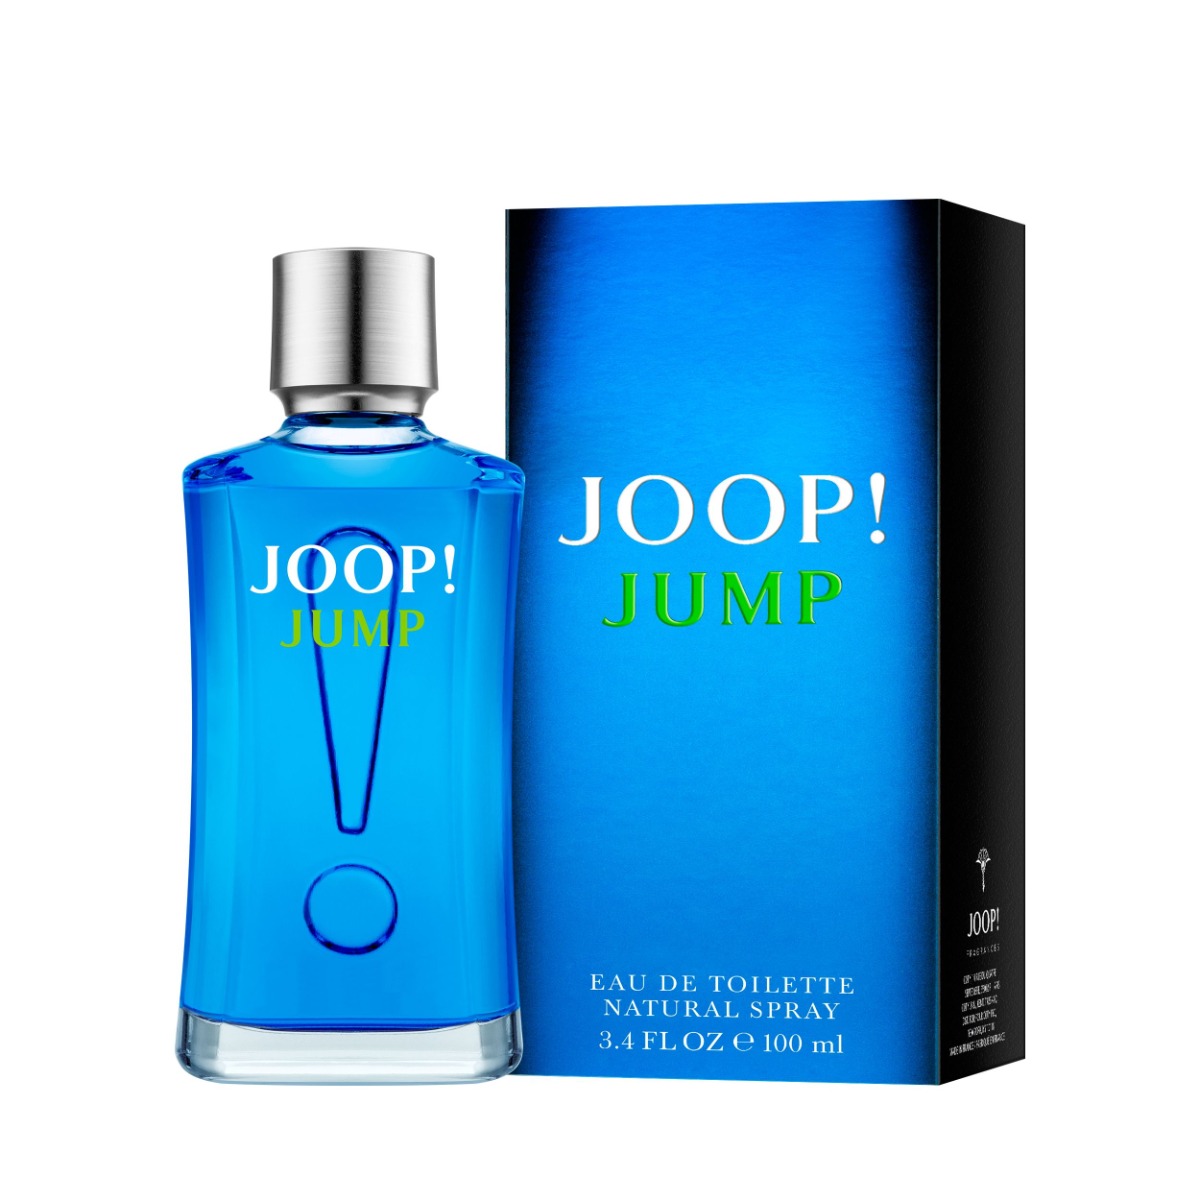 Joop! Jump toaletní voda pro muže 100 ml Joop!